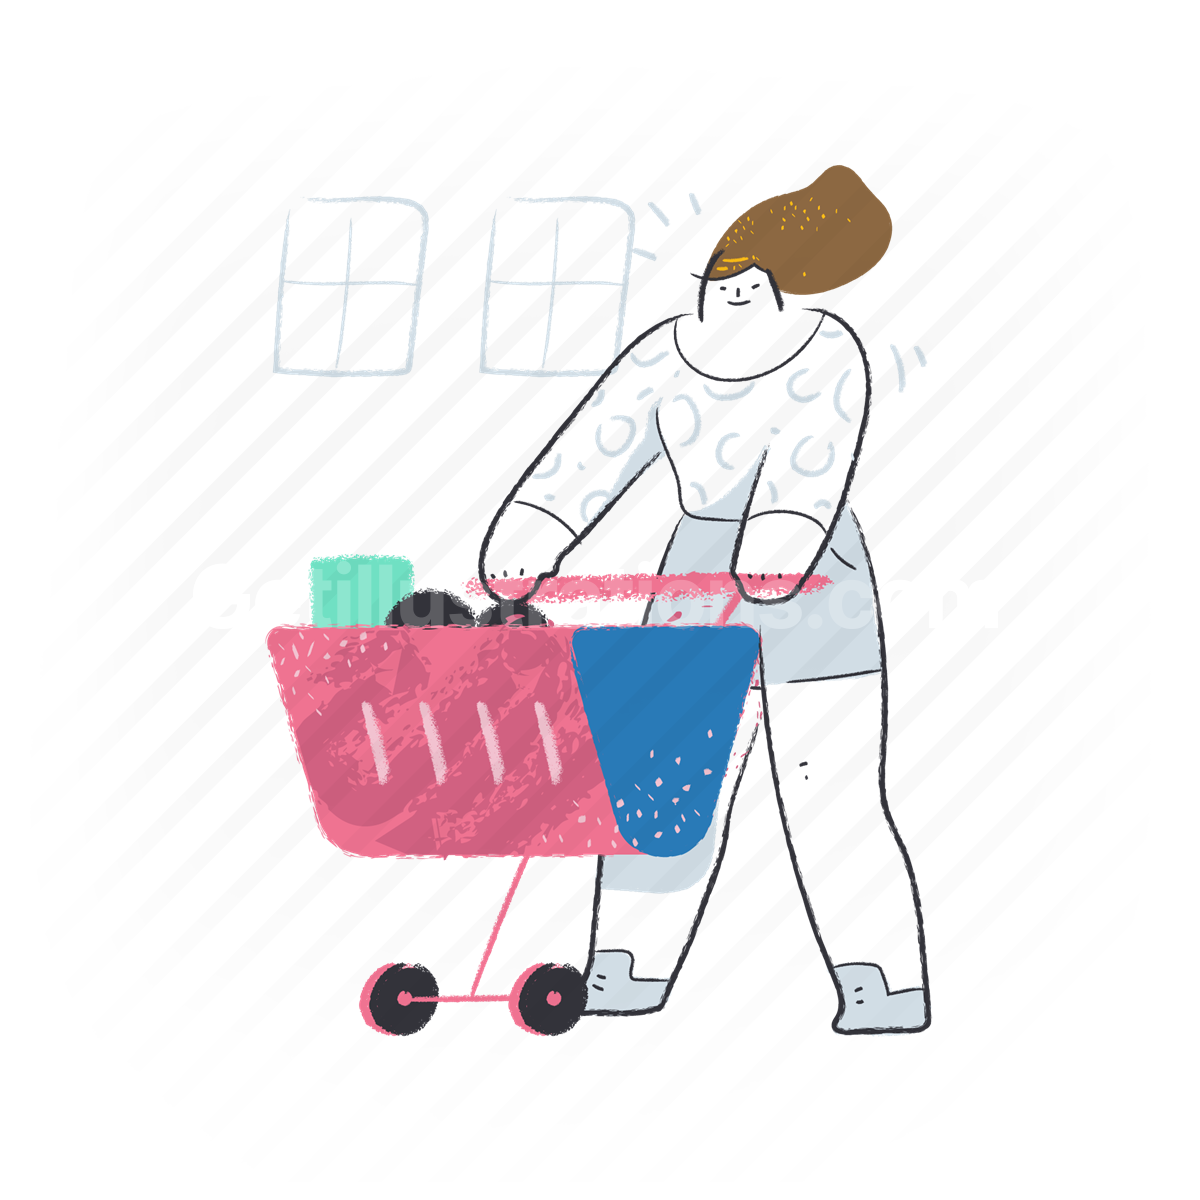 shop, cart, purchase, shopping cart, commerce